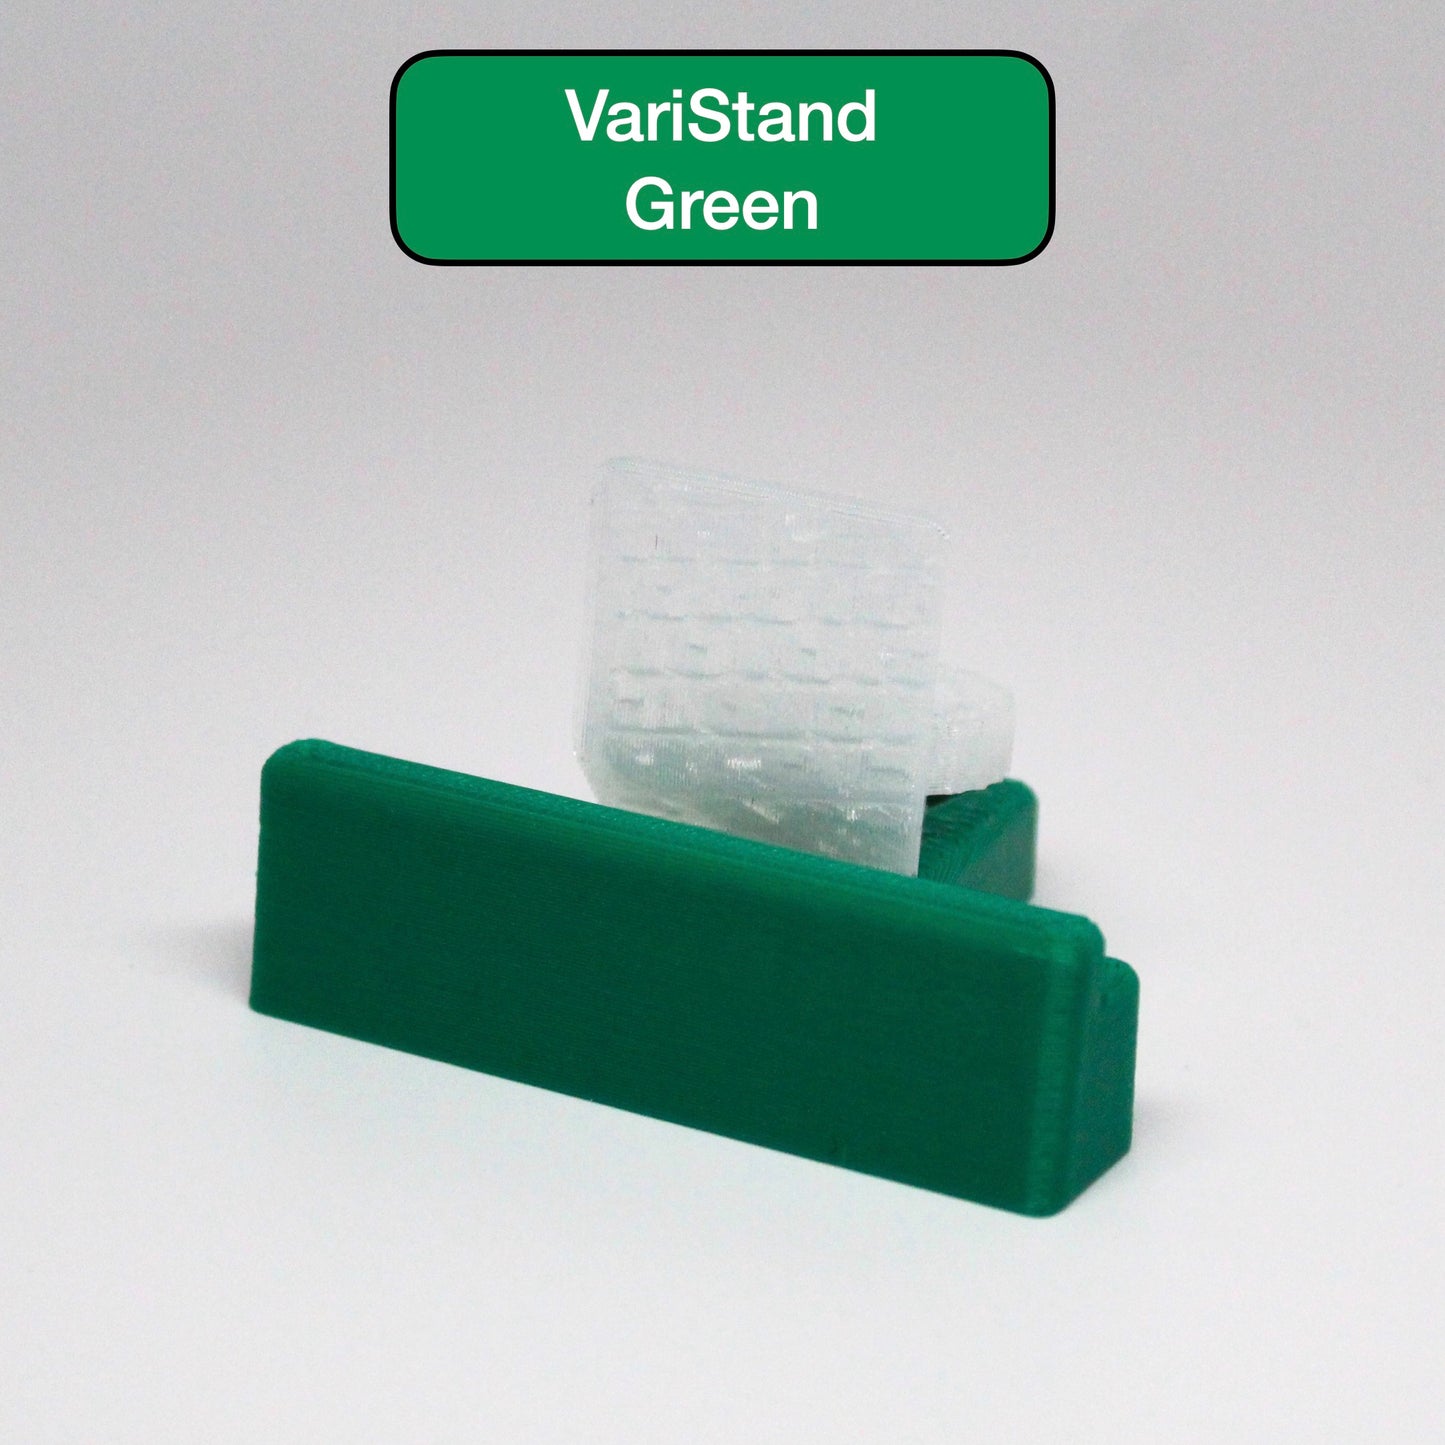 The Adjustable VariStand - Green